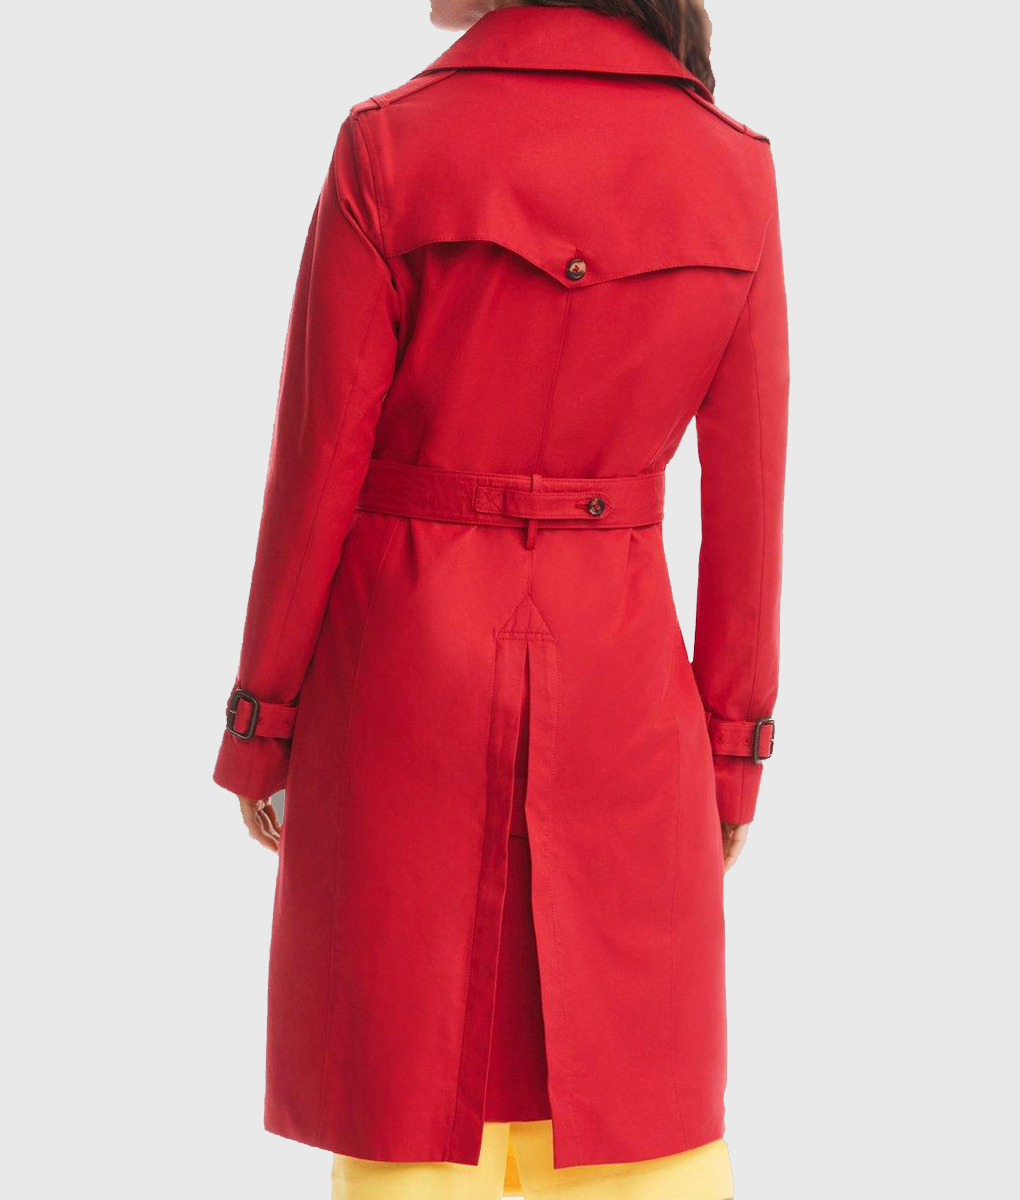 Alice Braga Dark Matter Red Trench Coat (2)